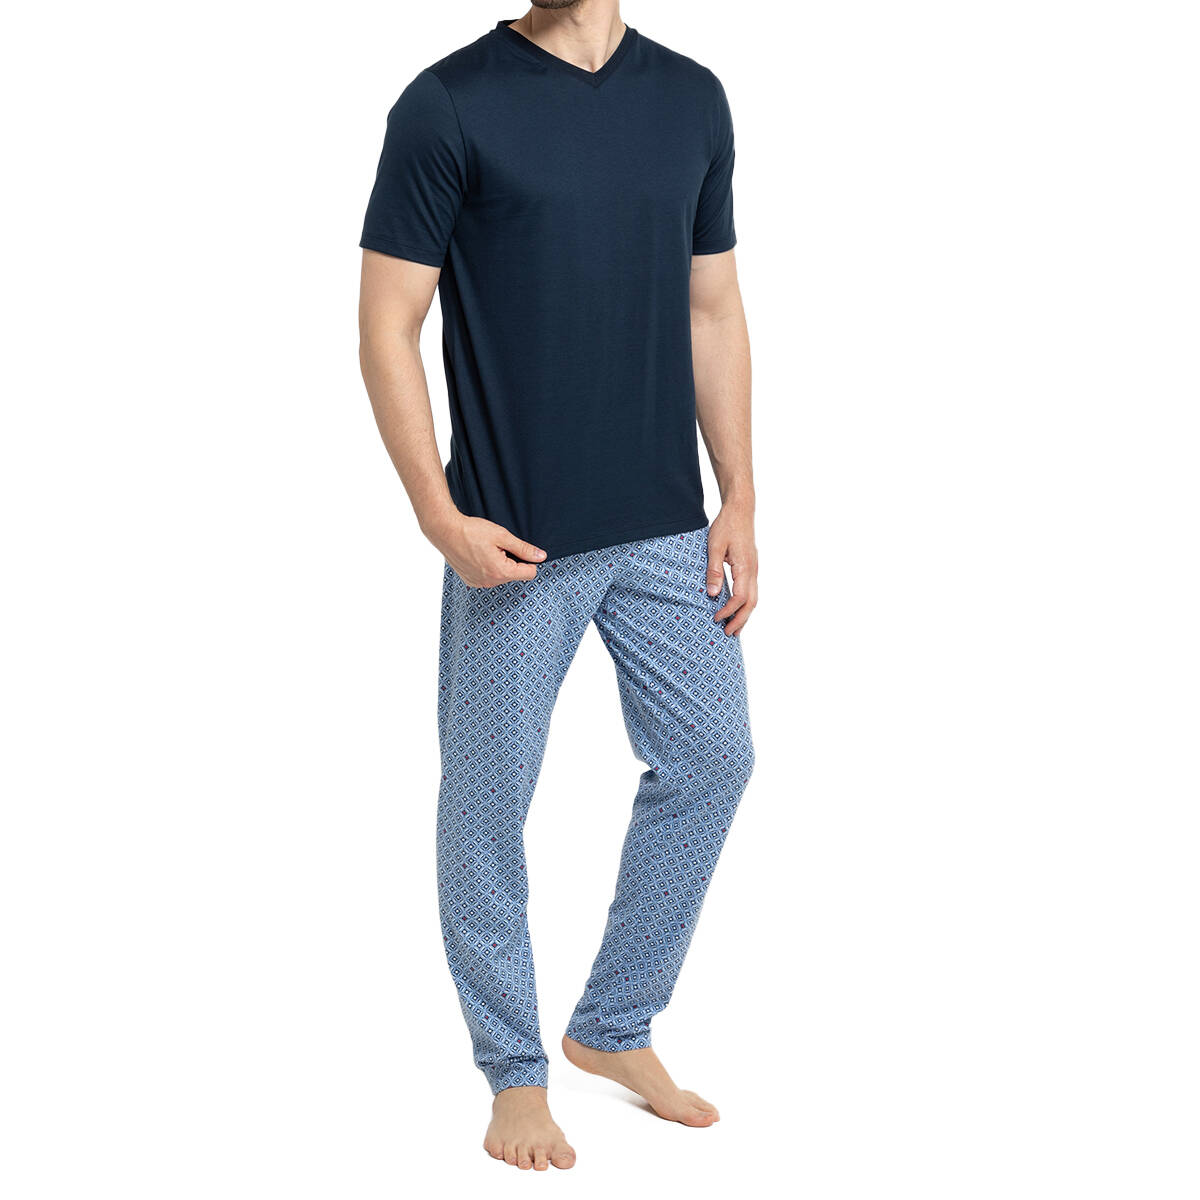 Seidensticker - Herren Schlafanzug lang - Single Jersey - kurzarm, 79,95 €